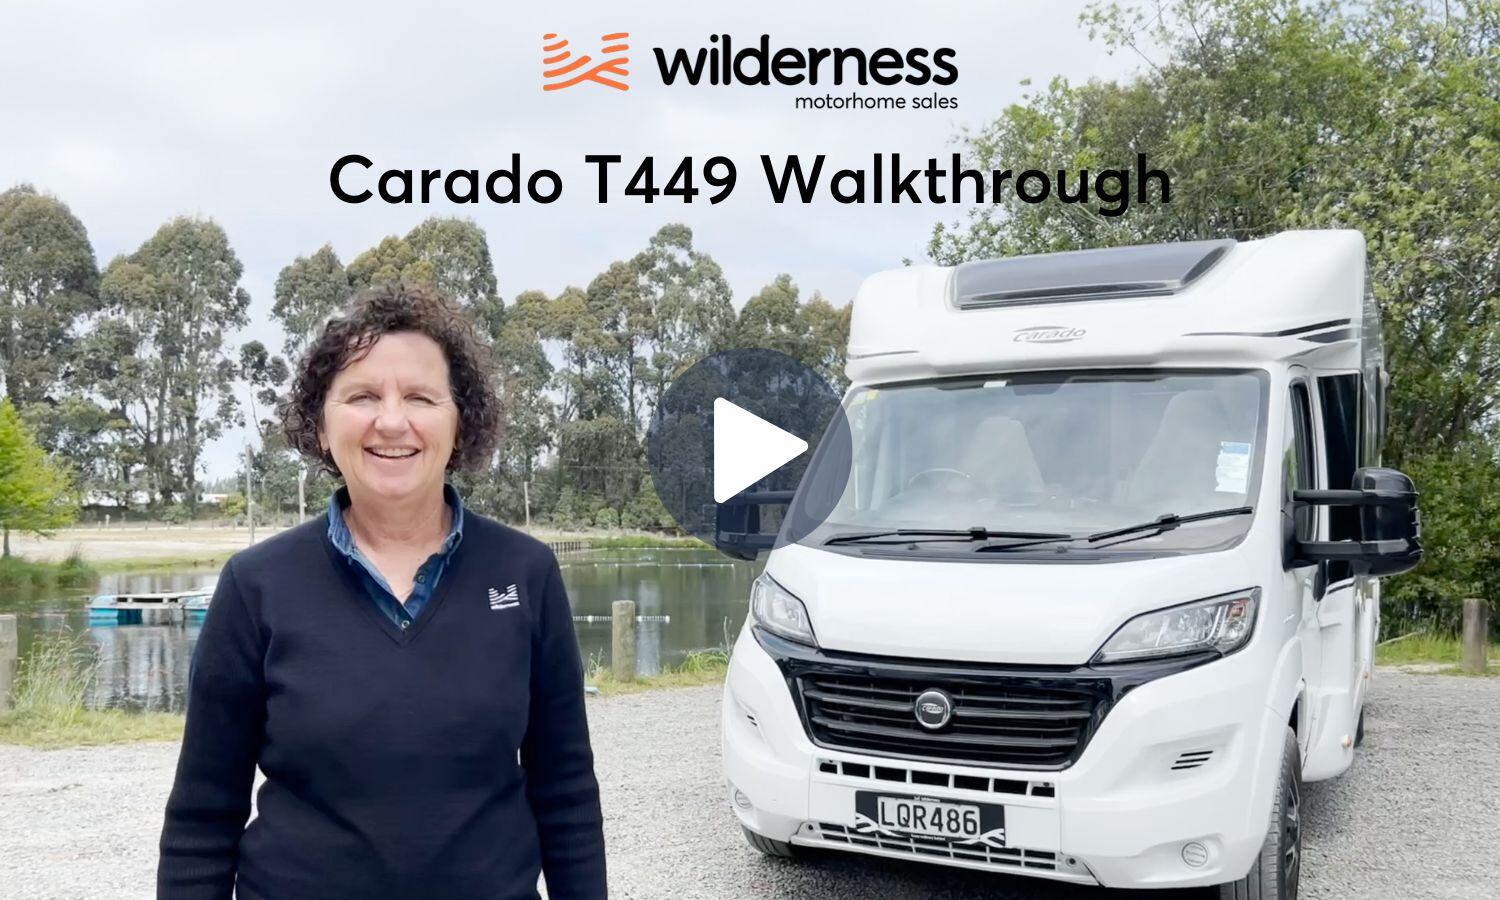 2019 Carado T449 For Sale NZ | Carado Motorhomes NZ | Wilderness Video